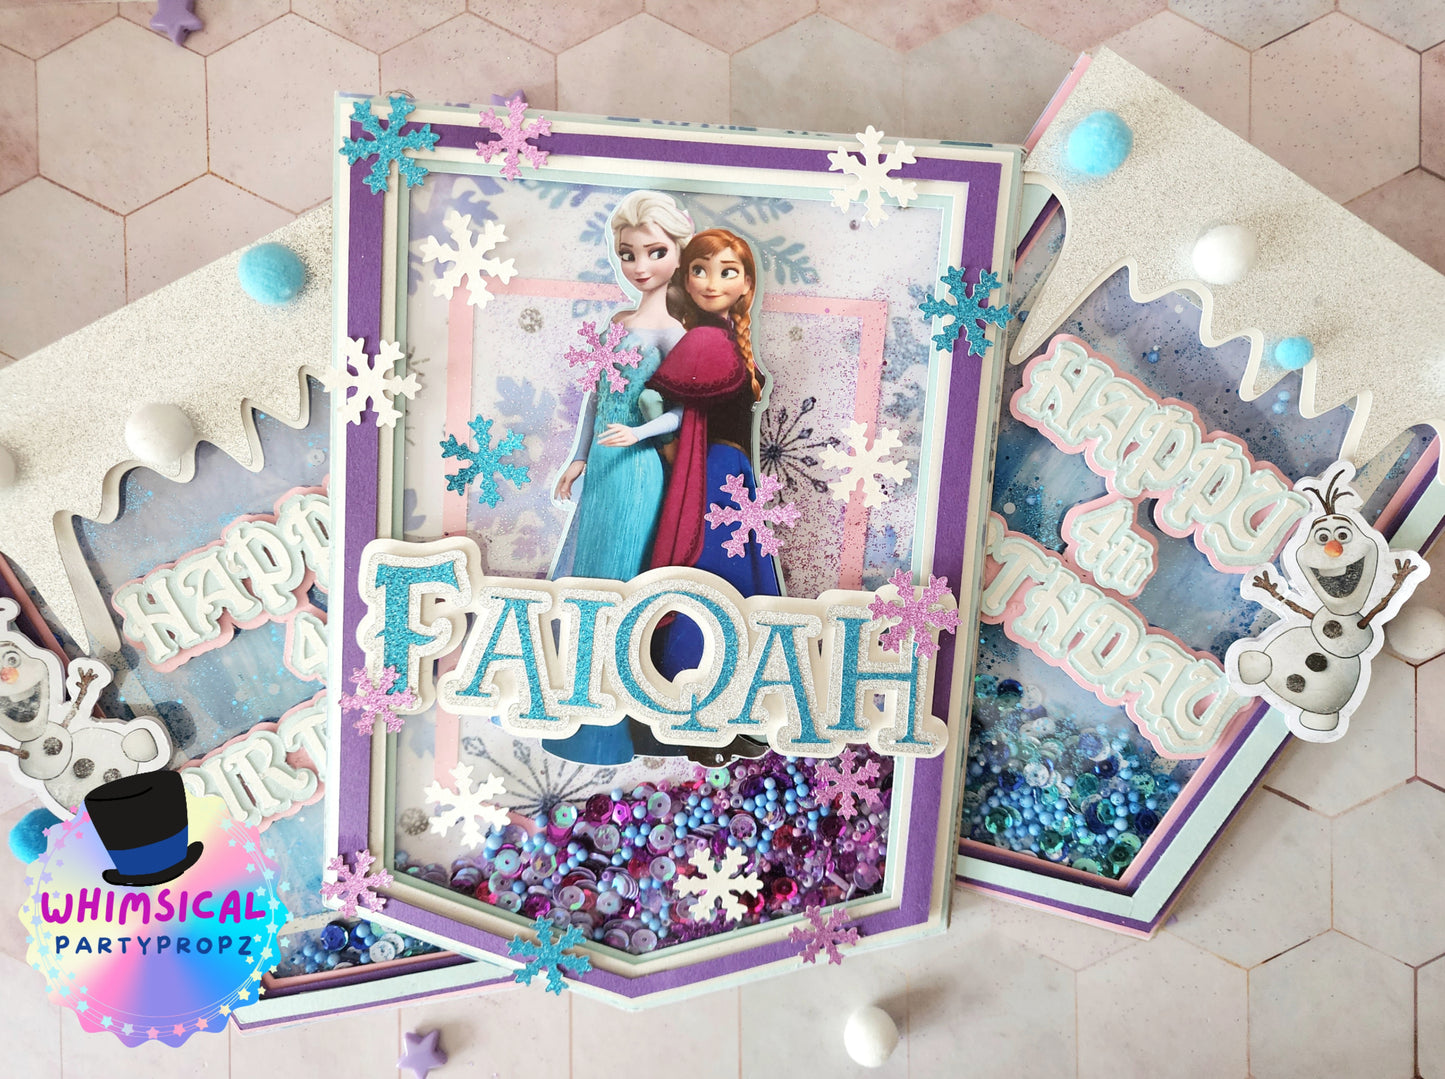 Princess Anna and Princess Elsa, Frozen - WHIMSICAL 3-flags banner